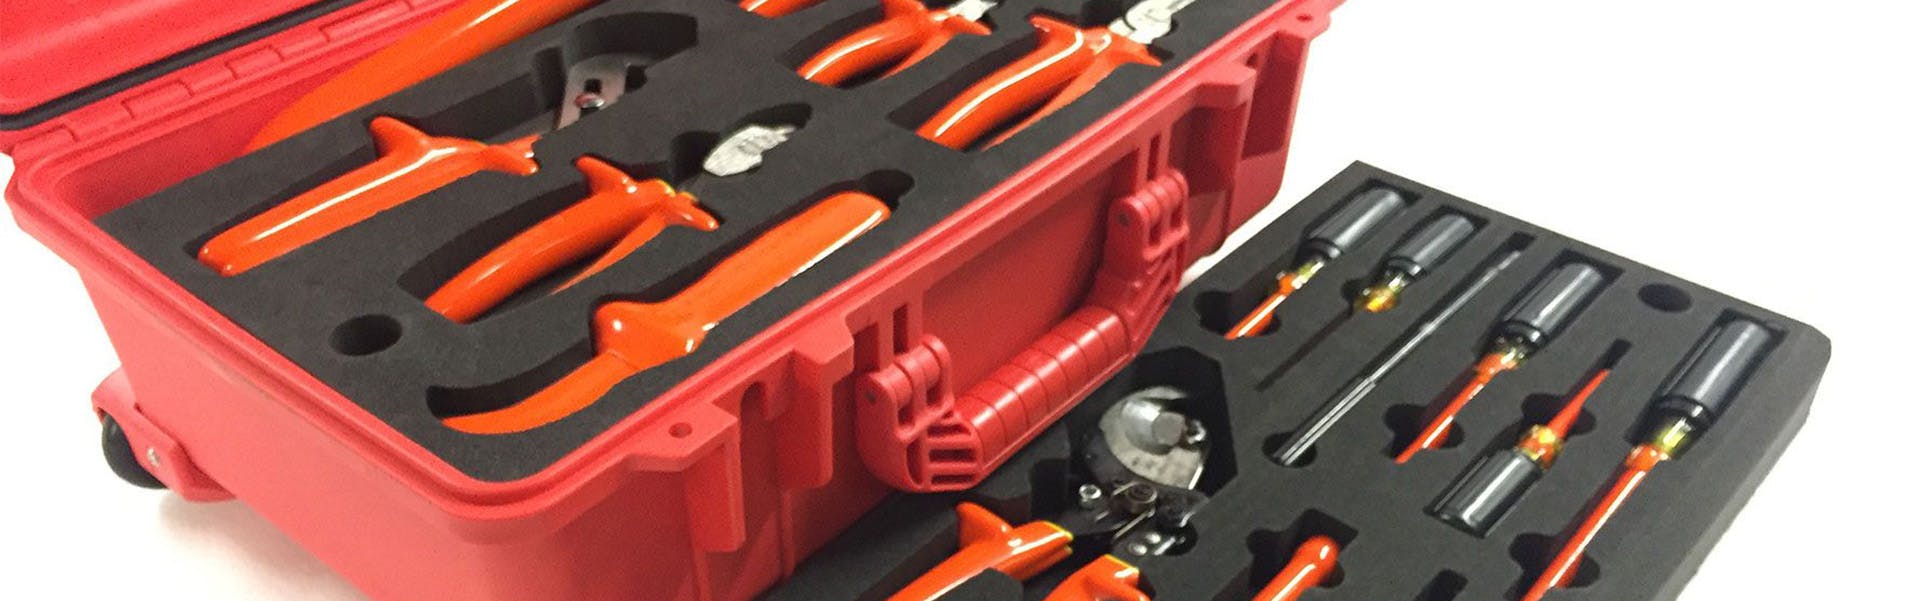 article image foam fabrication case inserts tool kit